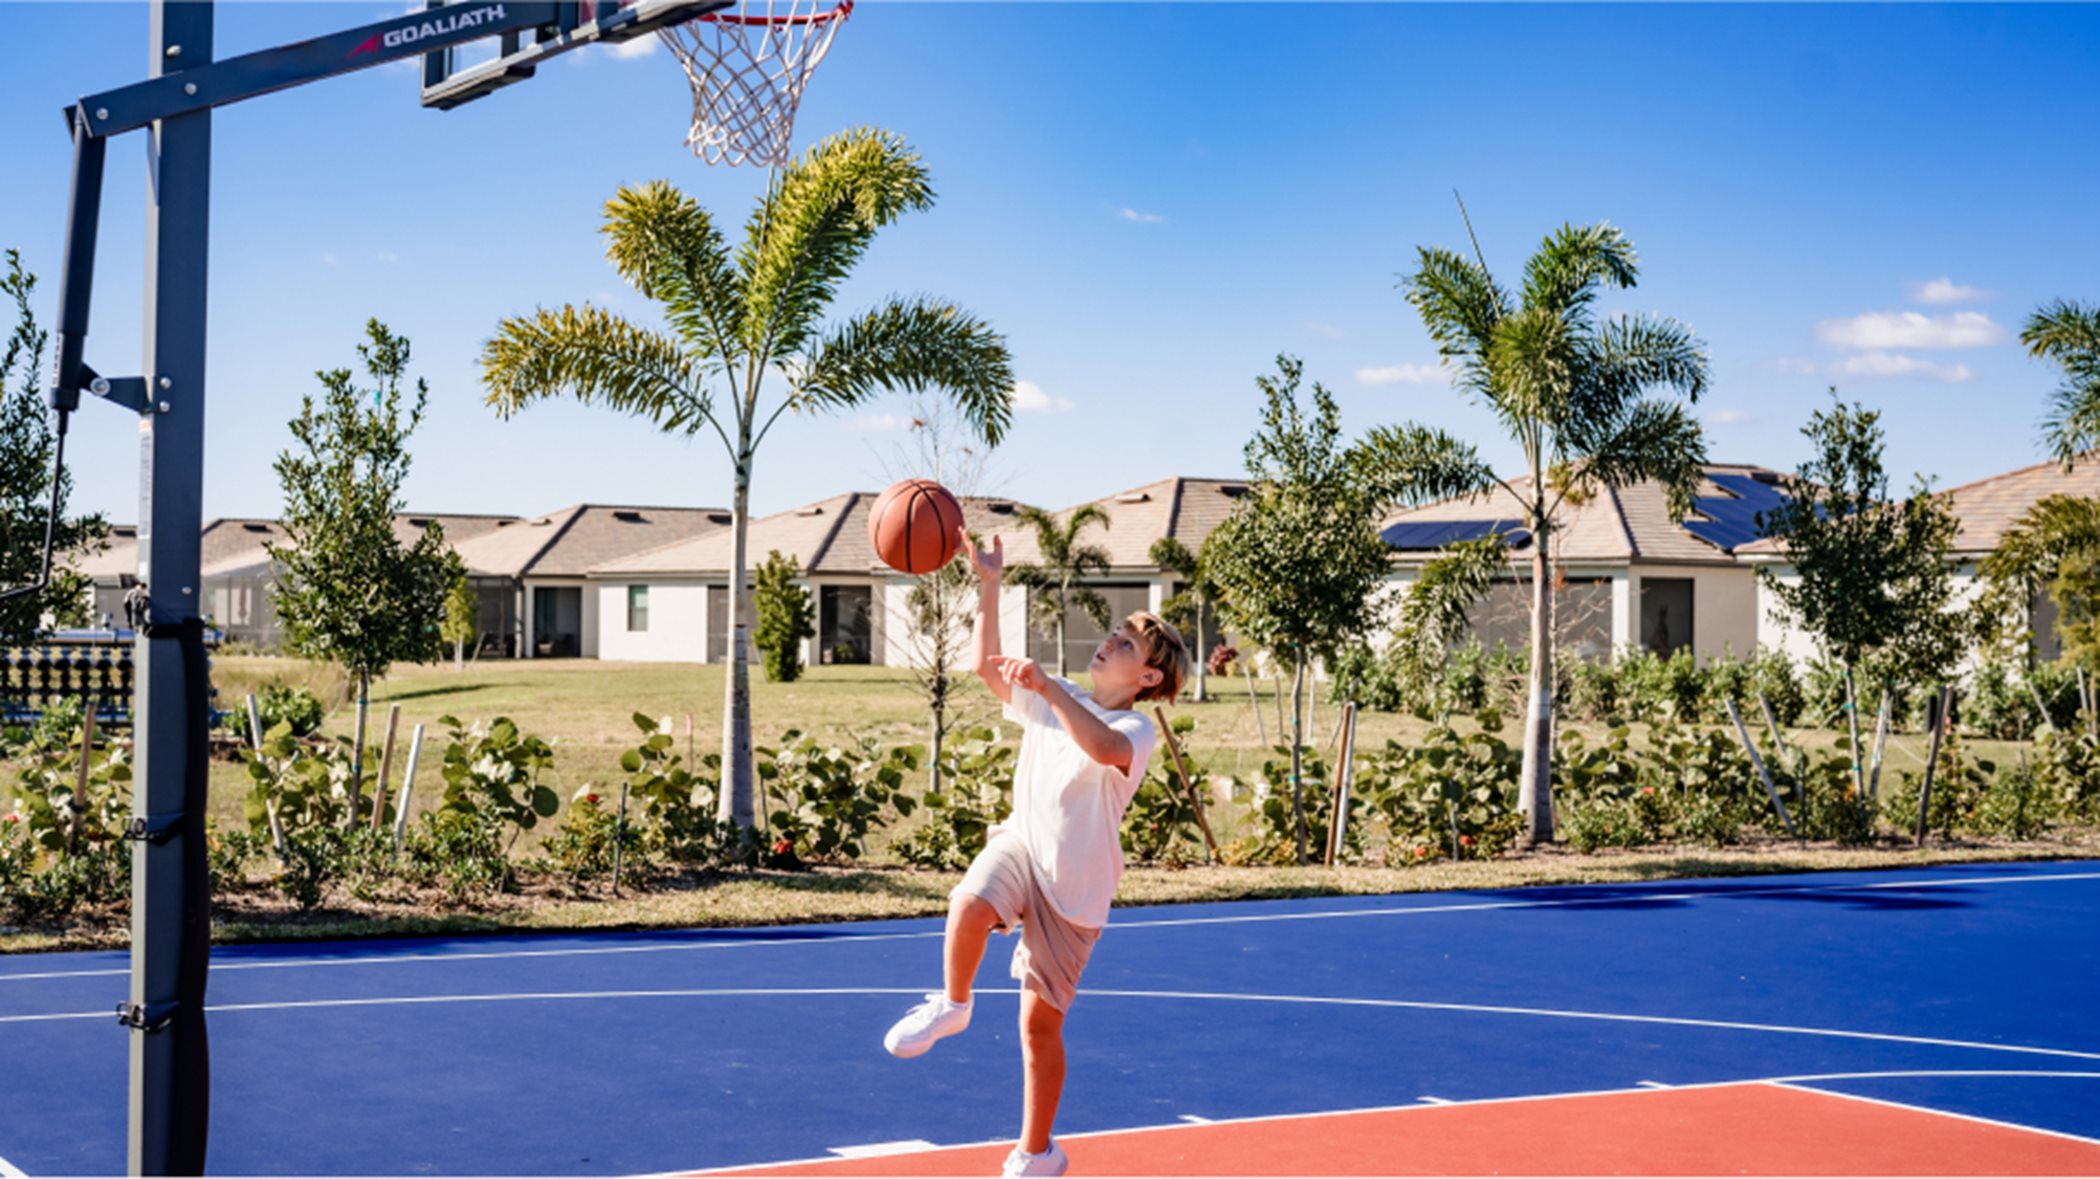 Outdoor basketball court community amenity 